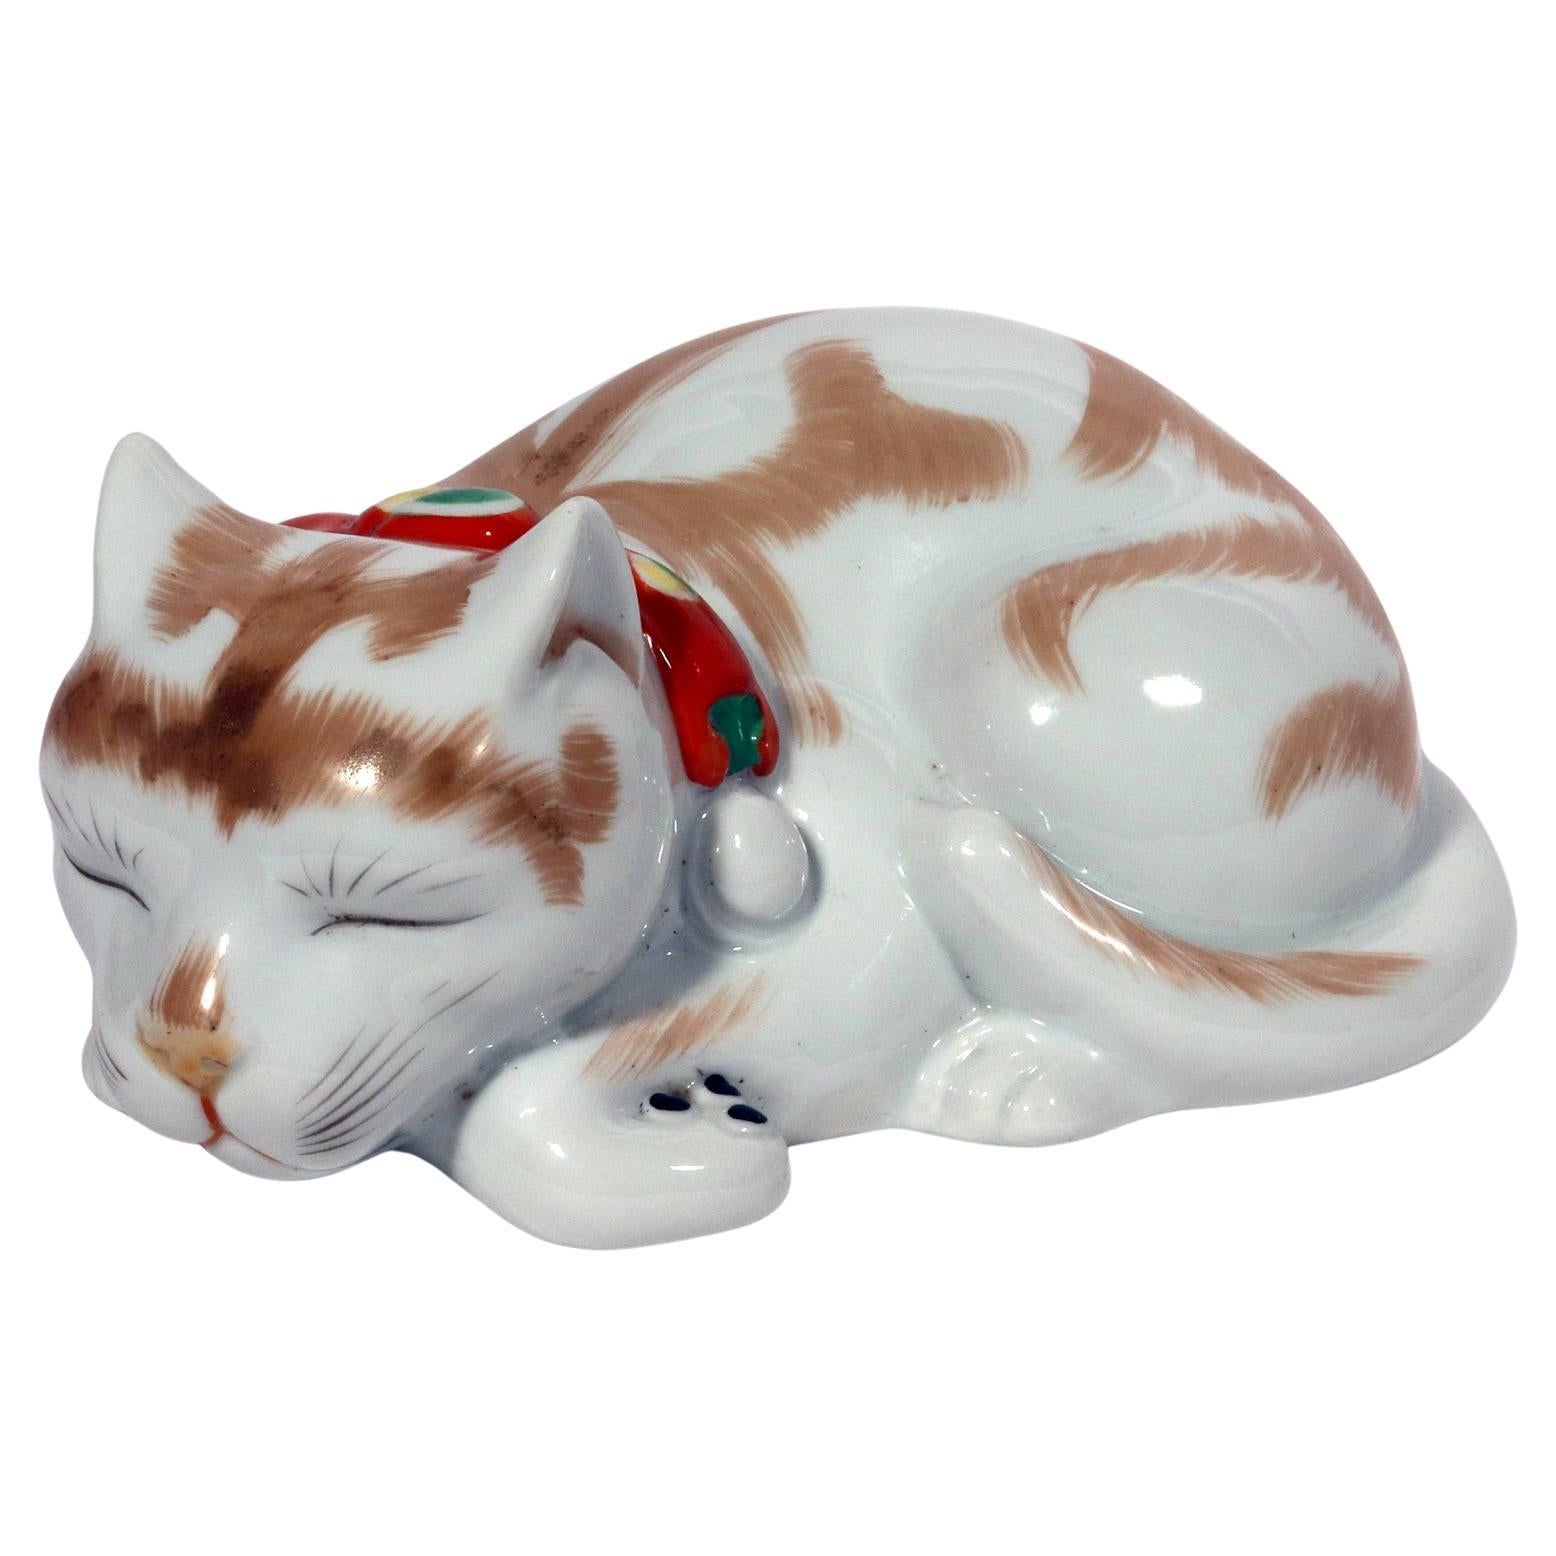 Japanese Kutani Porcelain Figure of a Sleeping Cat